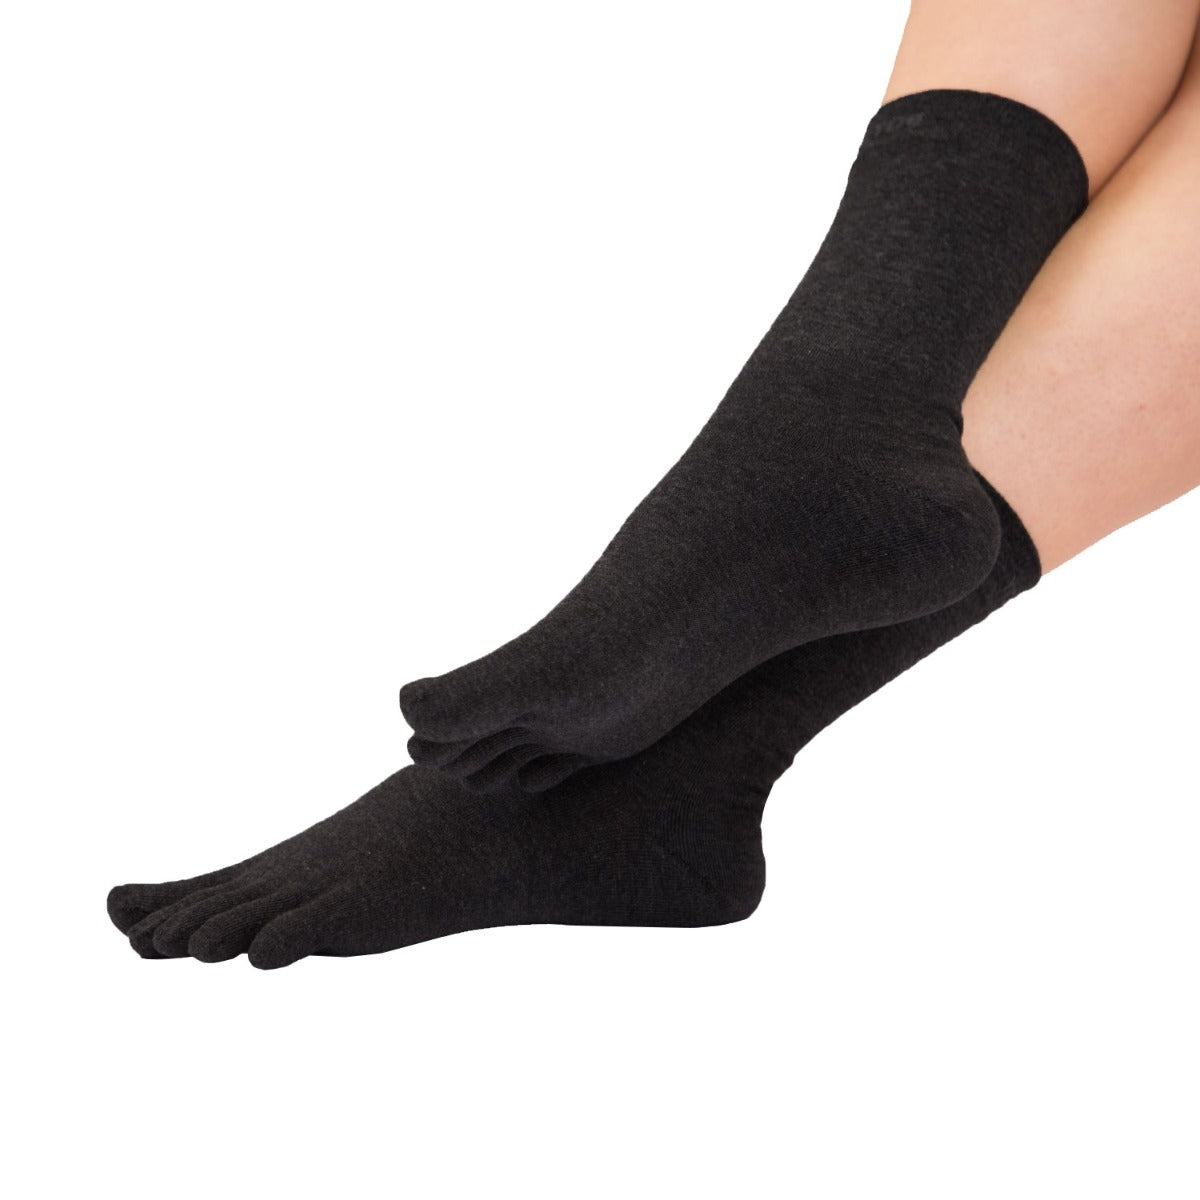 Toe Socks with Silver Black